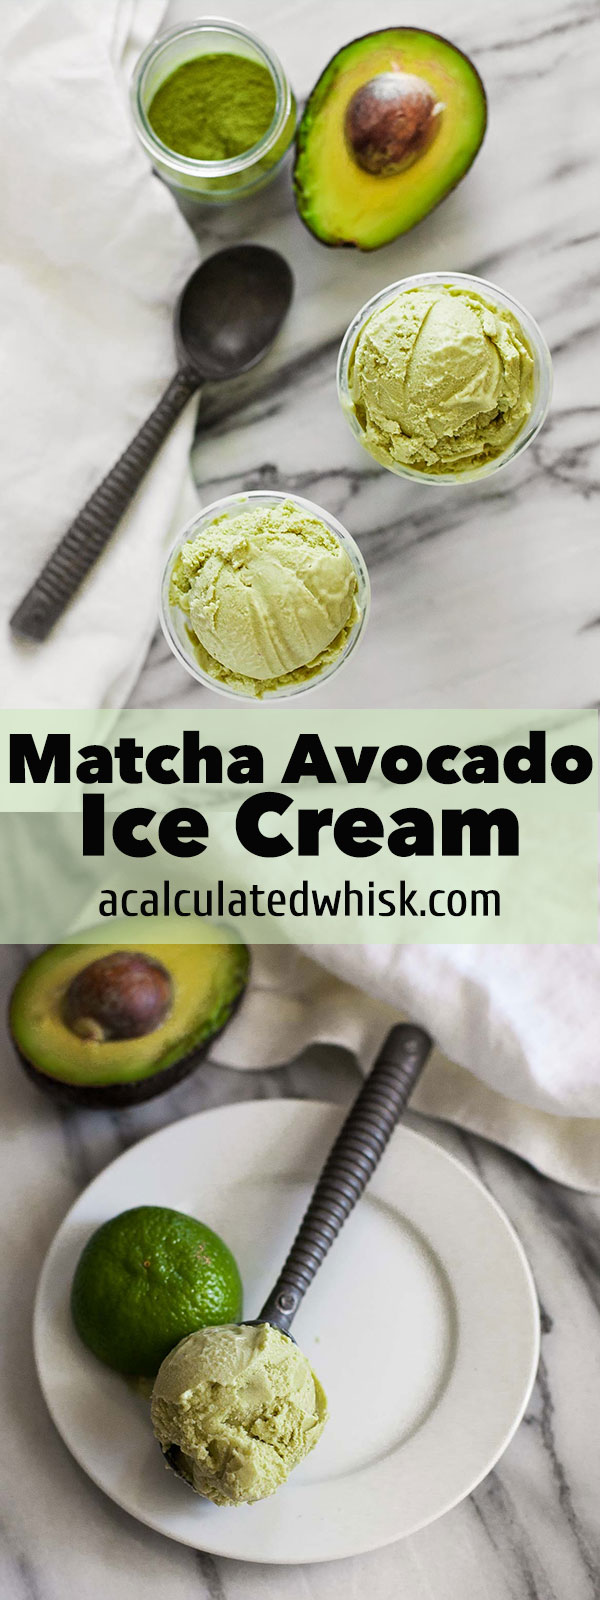 Matcha Avocado Ice Cream | acalculatedwhisk.com